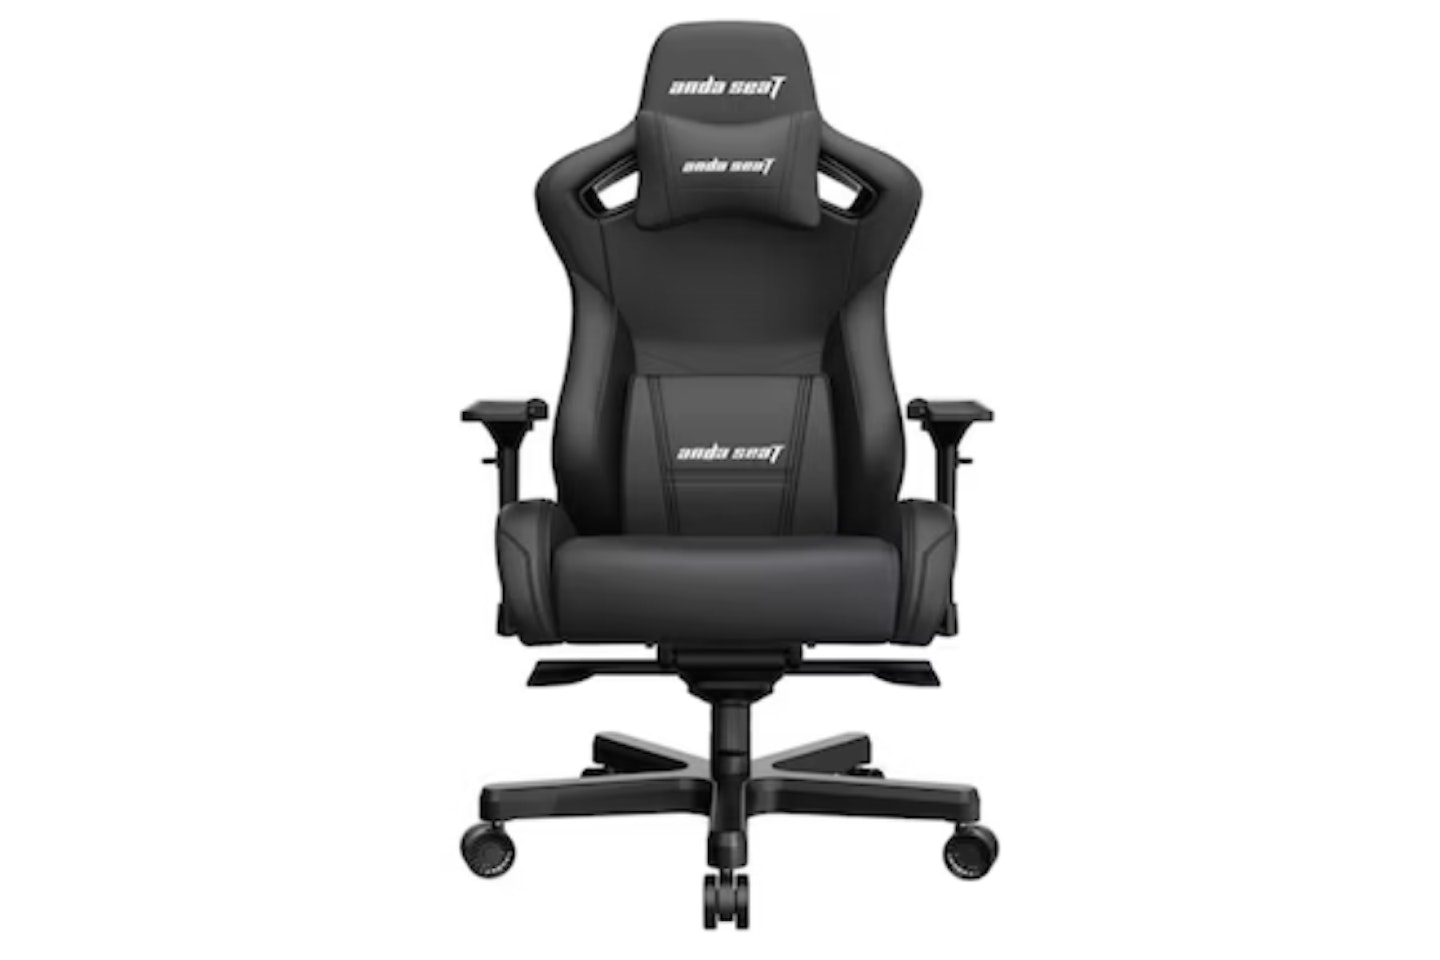 Anda Seat Kaiser 2 Pro Gaming Chair